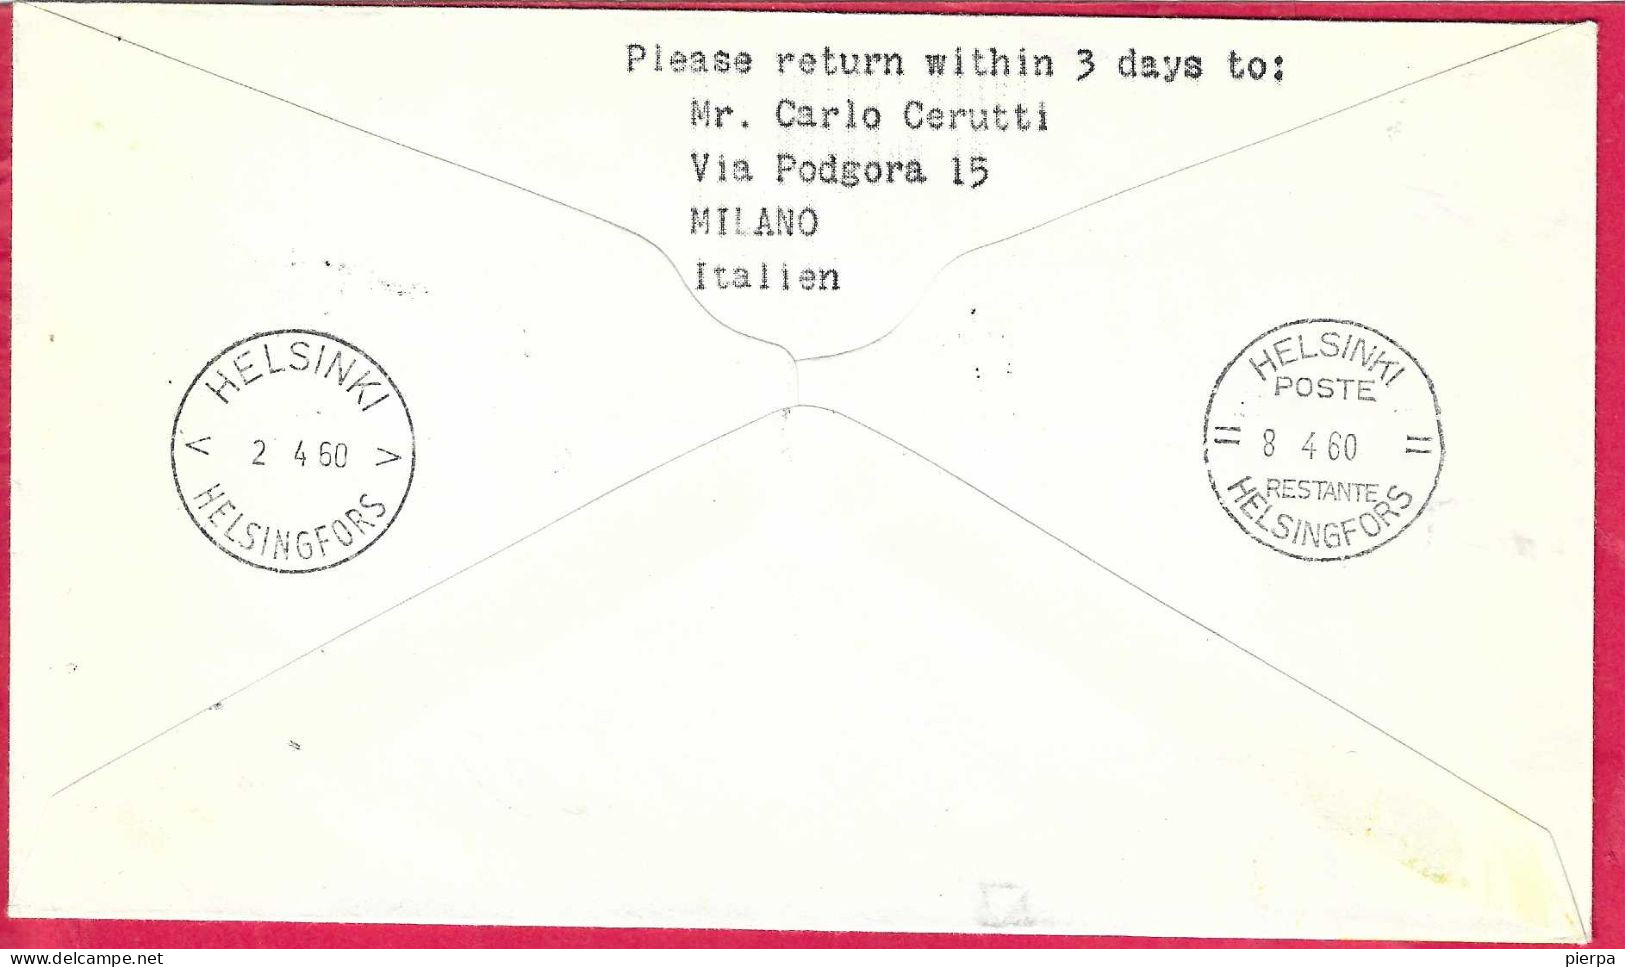 DANMARK - FIRST CARAVELLE FLIGHT - FINNAIR - FROM KOBENHAVN TO HELSINKY *1.4.60* ON OFFICIAL COVER - Airmail